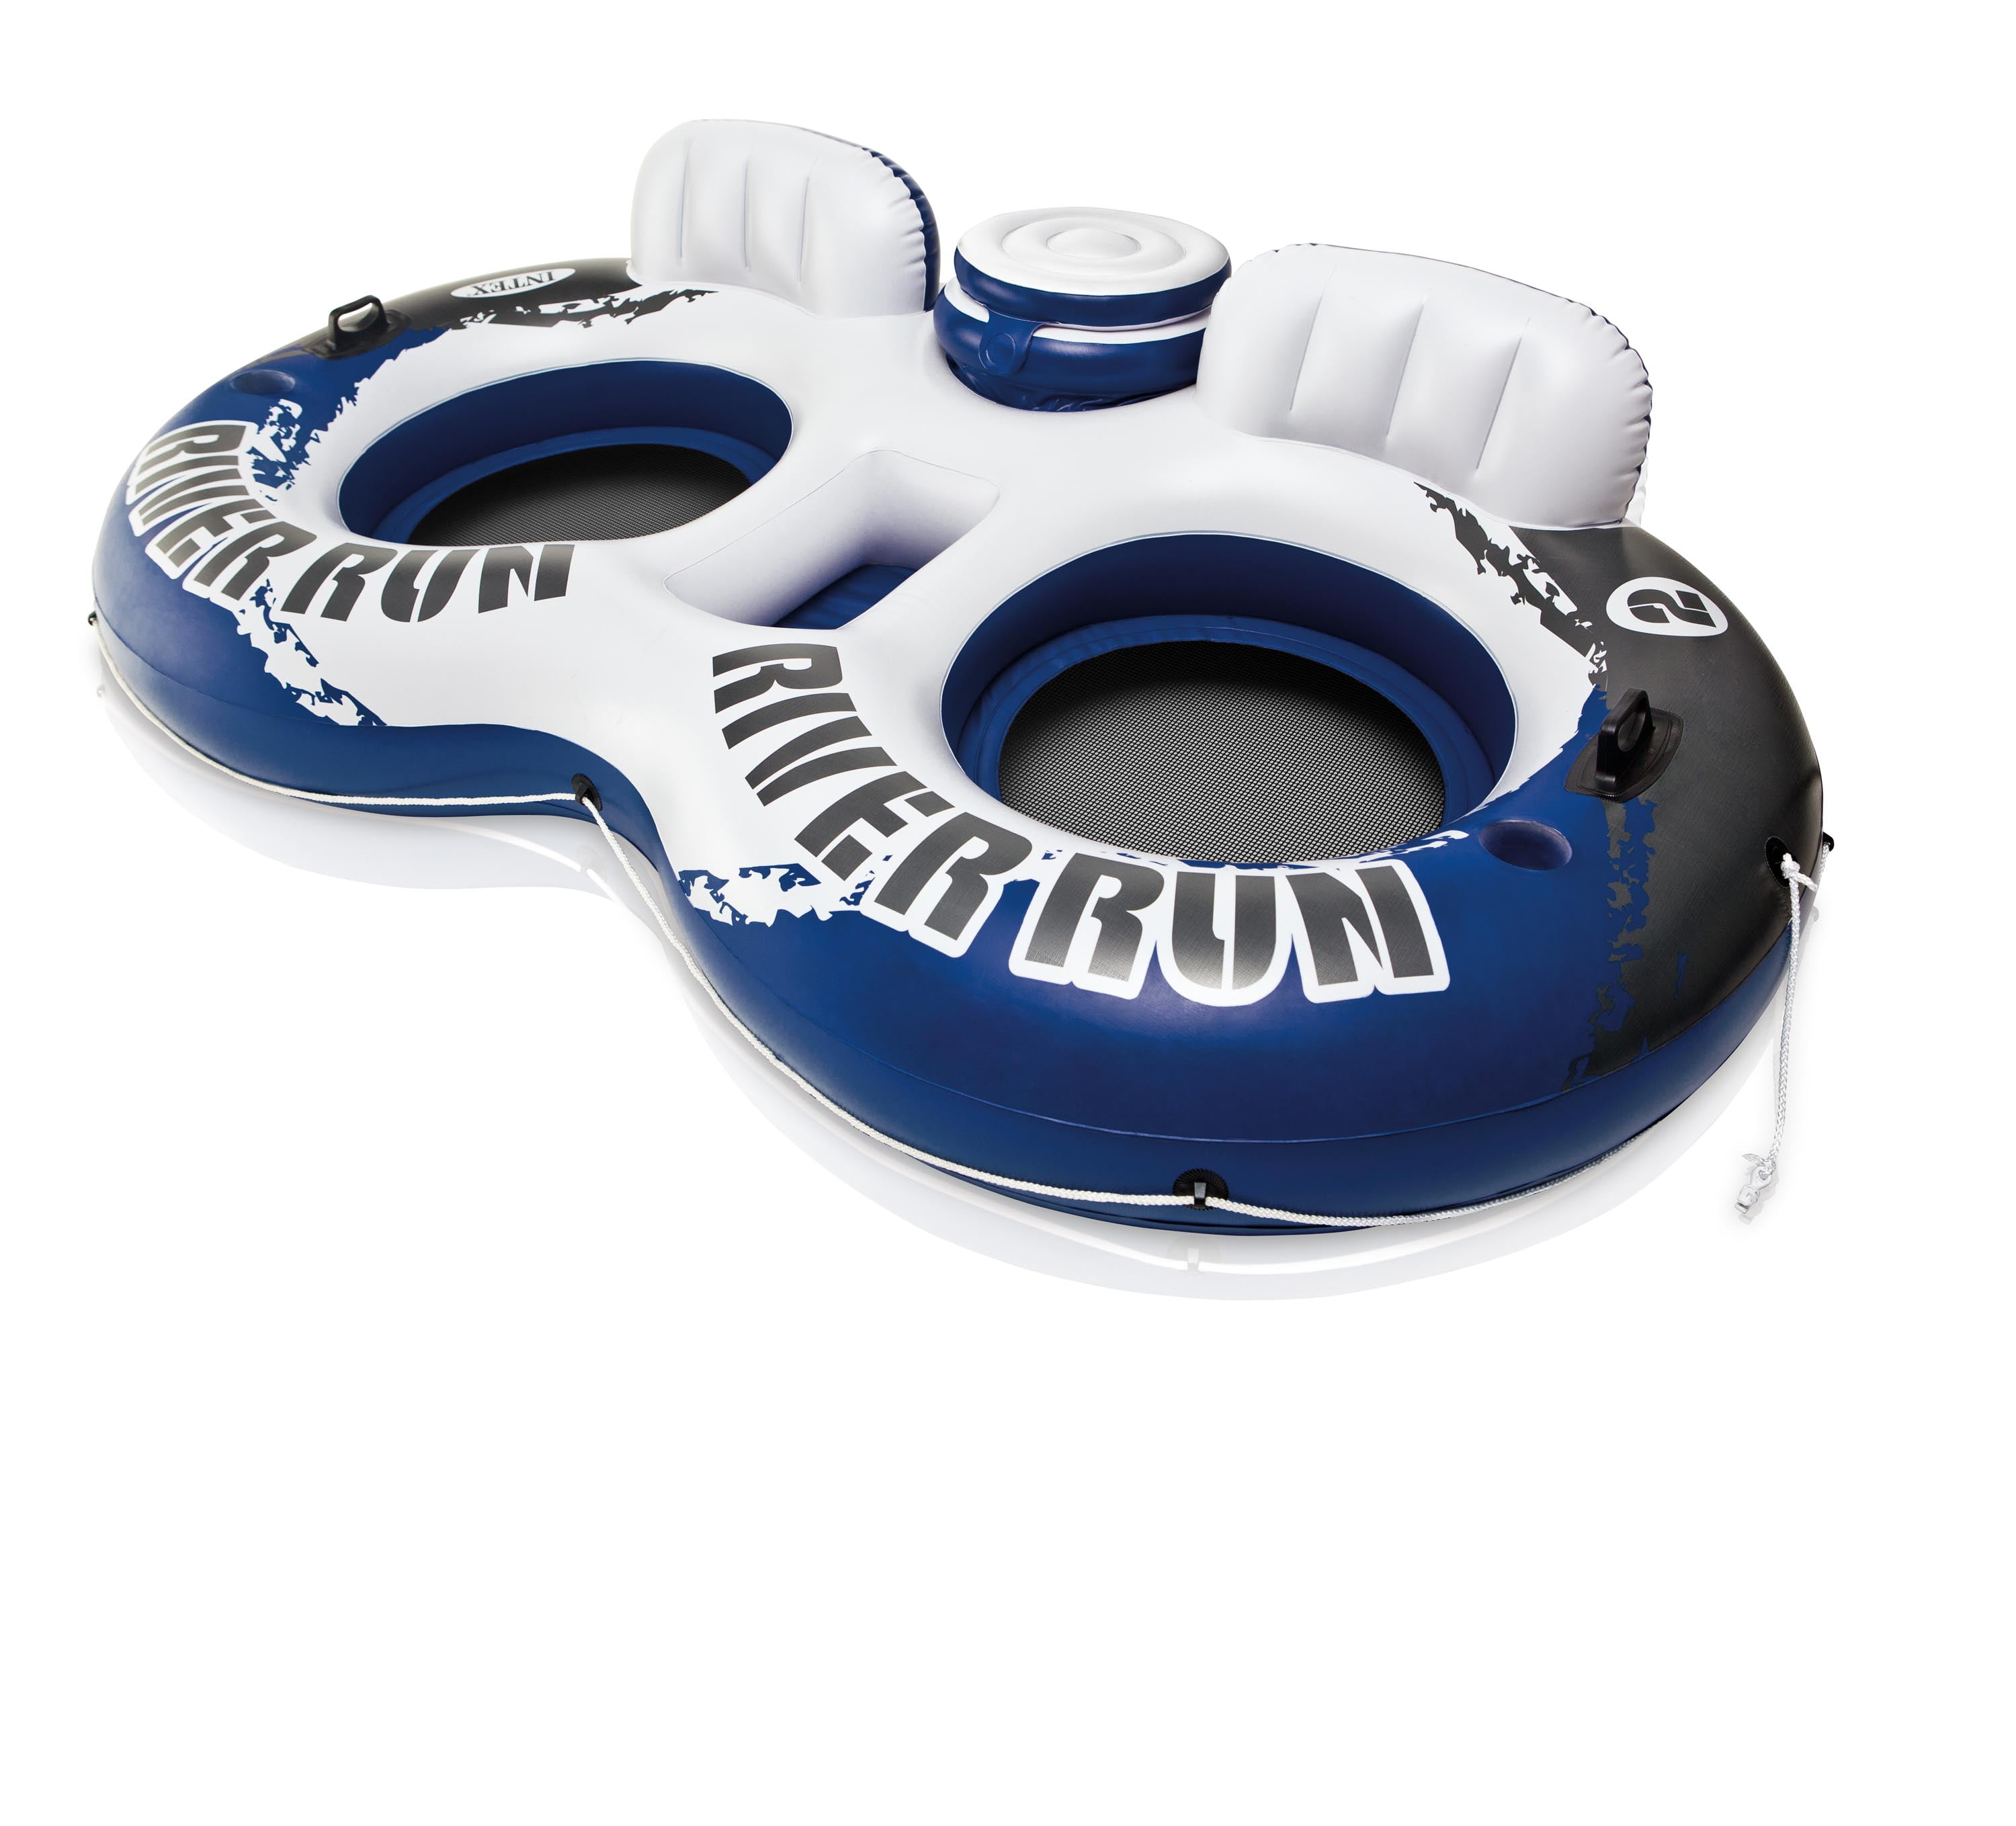 4 Intex River Run 1 Inflatable Floating Tube RaftOpen Box 